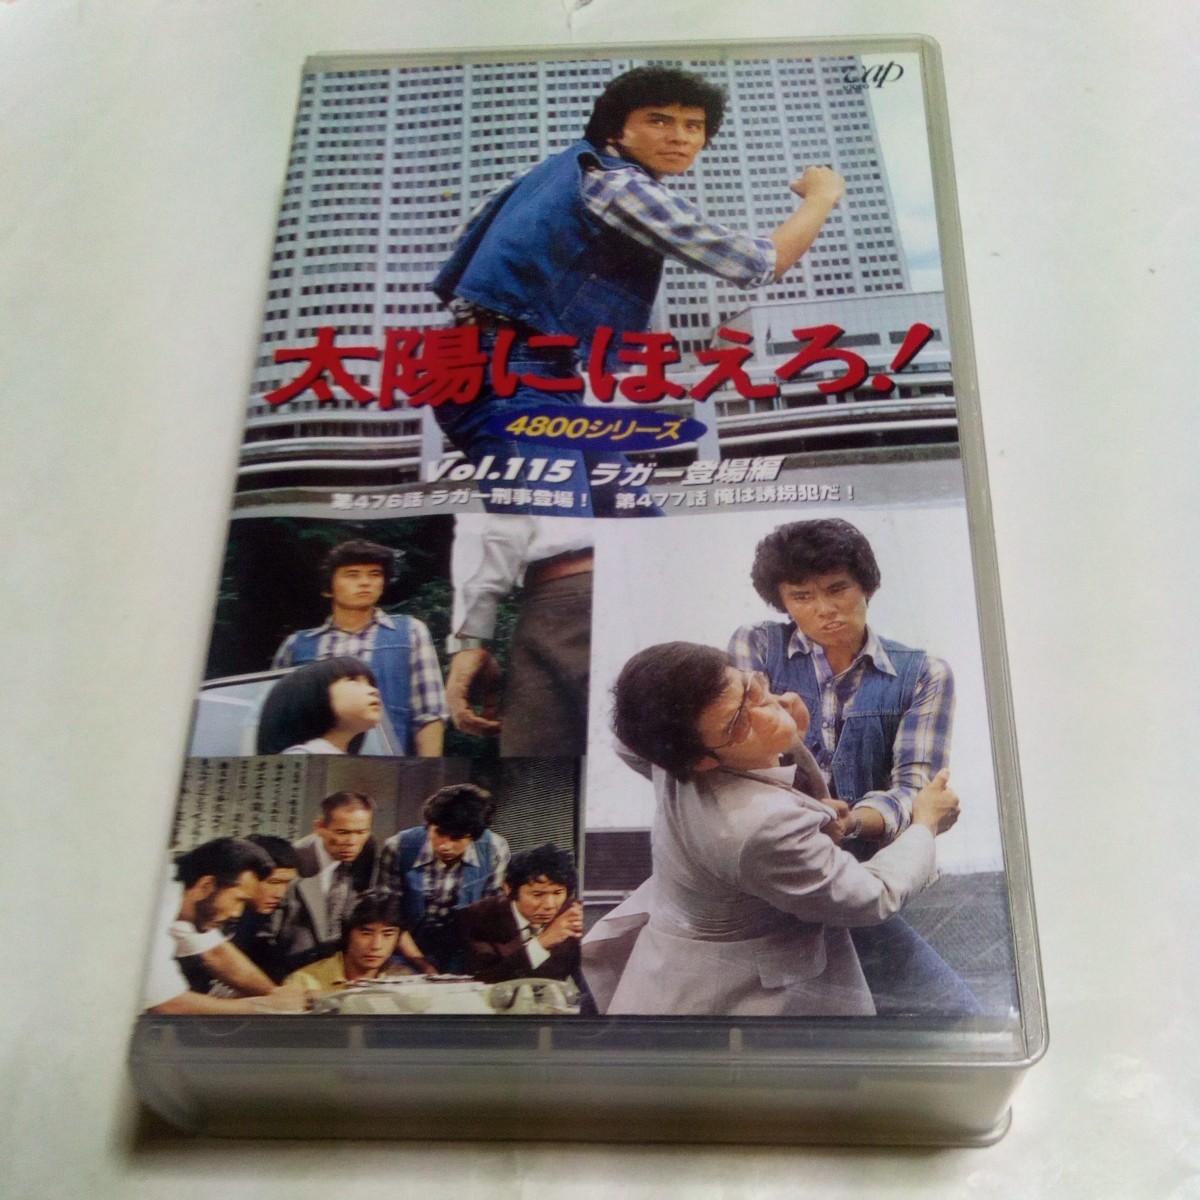 VHS video Taiyou ni Hoero! 4800 series Vol.115 Rugger appearance compilation performance * stone .. next ., Watanabe Toru, god rice field regular shining,..., tree . origin .,... other 